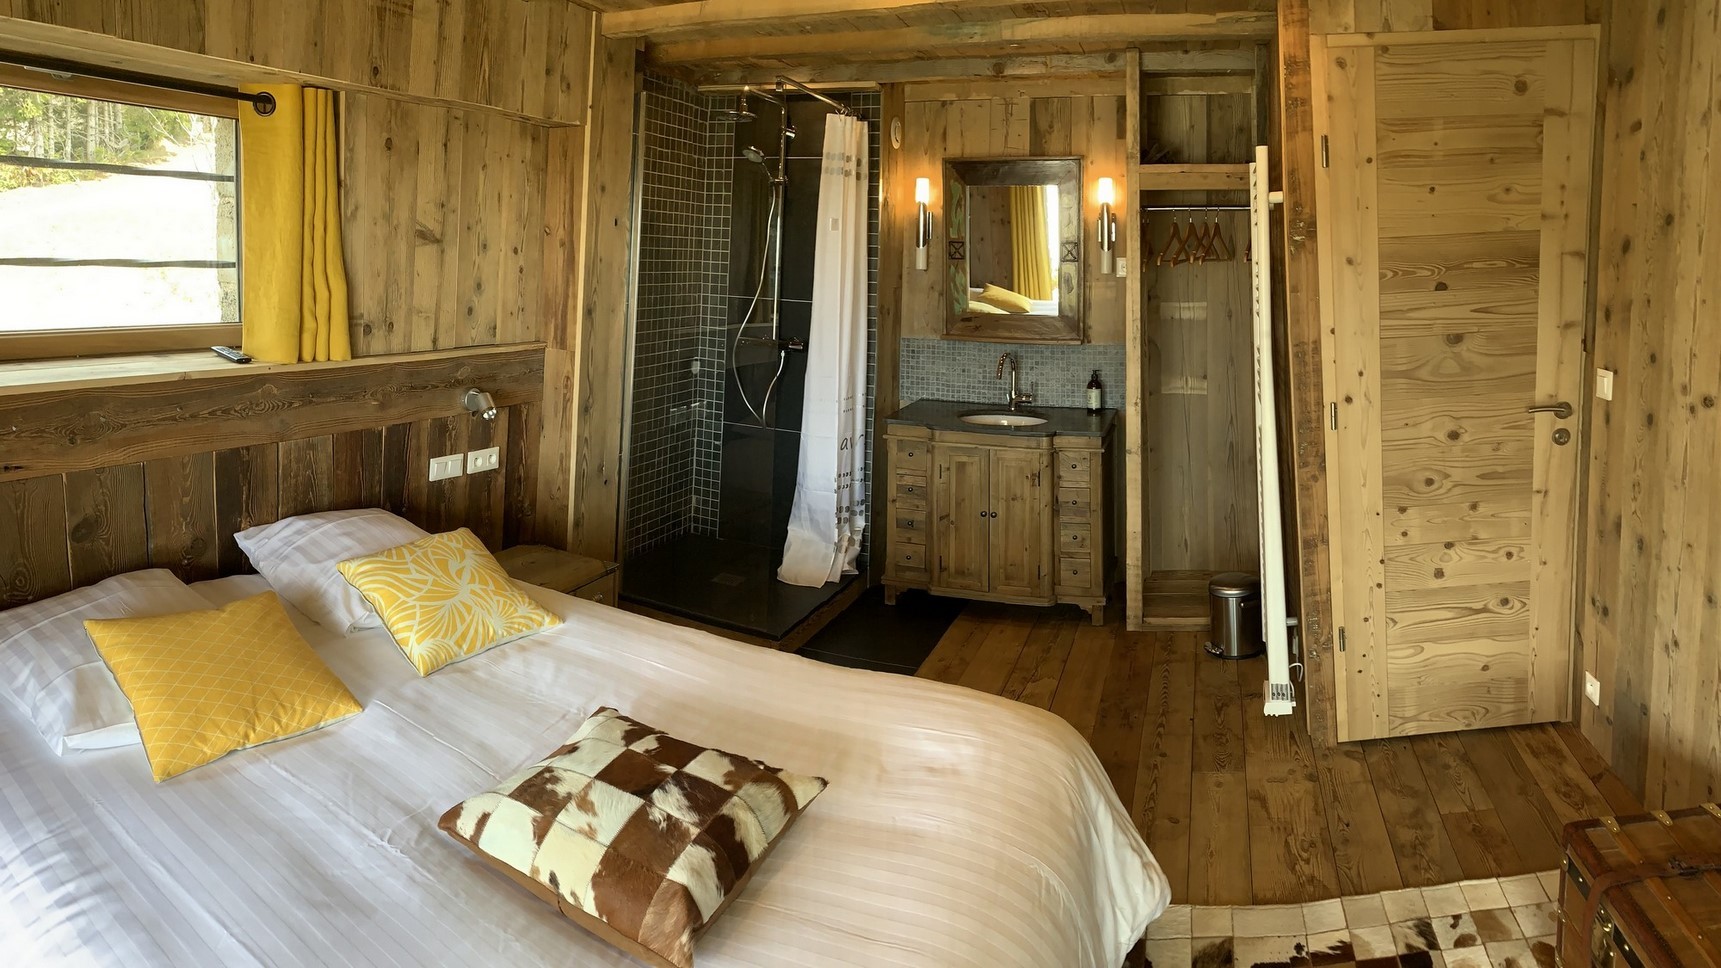 Parental suite king size bed 1 or 2 people, shower 90x90, old wood furniture